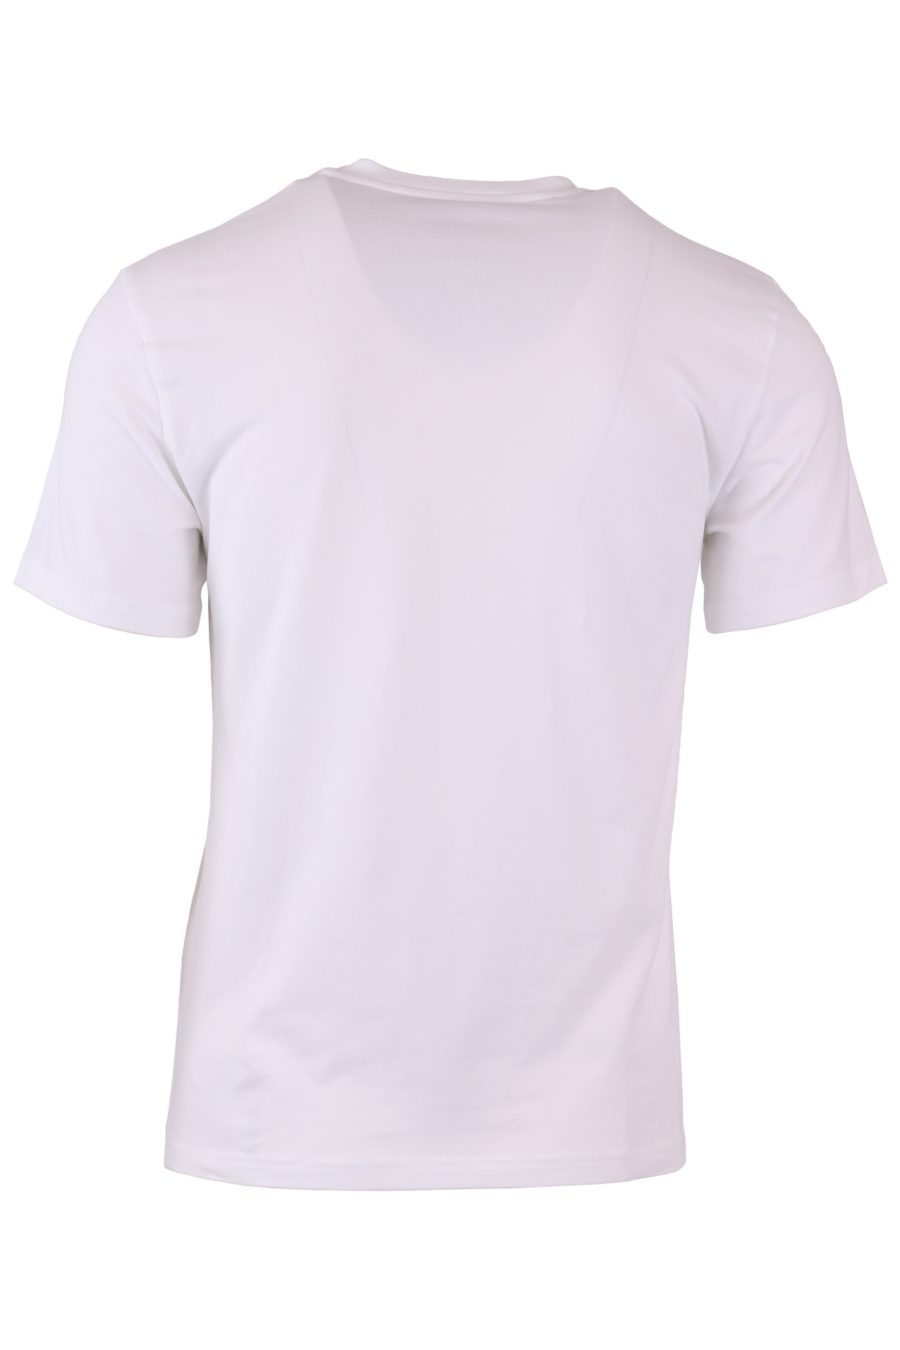 Camiseta Moschino Couture blanca con logo y doble pregunta delantera - b005ef040599c9aaad43e541ce04a7022decaf84